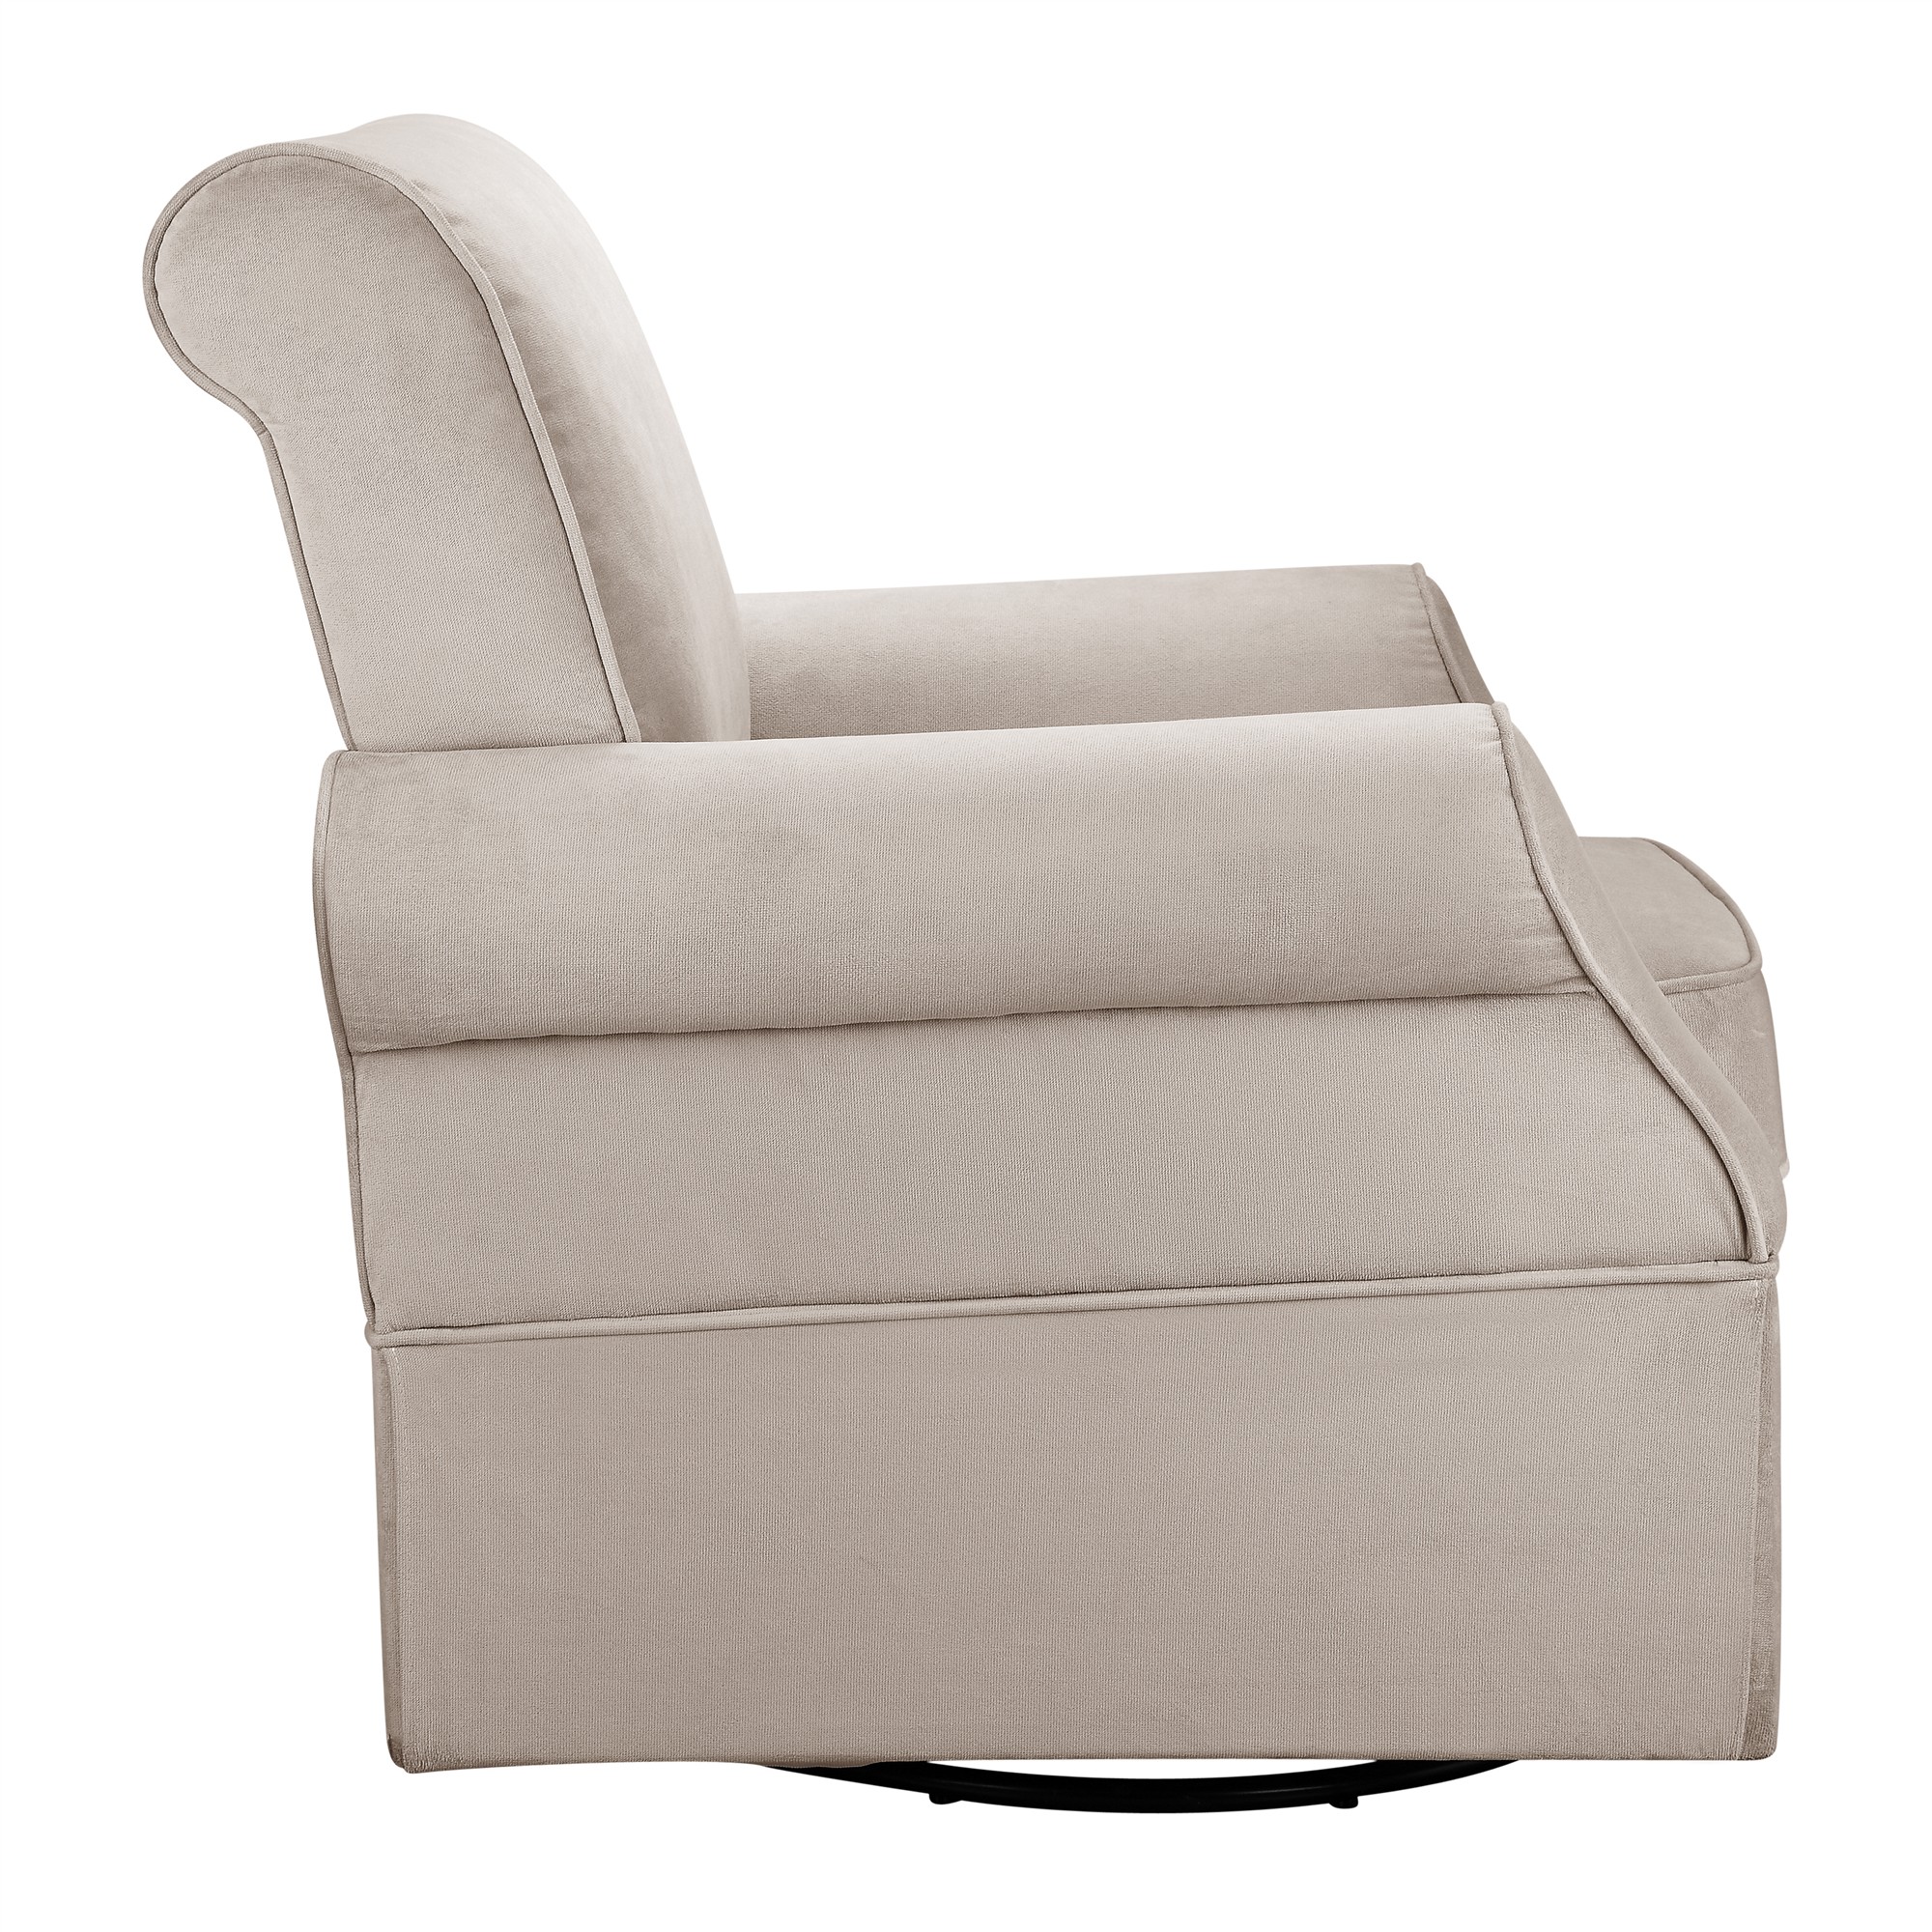 Baby Relax Kelcie Swivel Glider Chair & Ottoman Nursery Set, Beige Microfiber - image 5 of 15